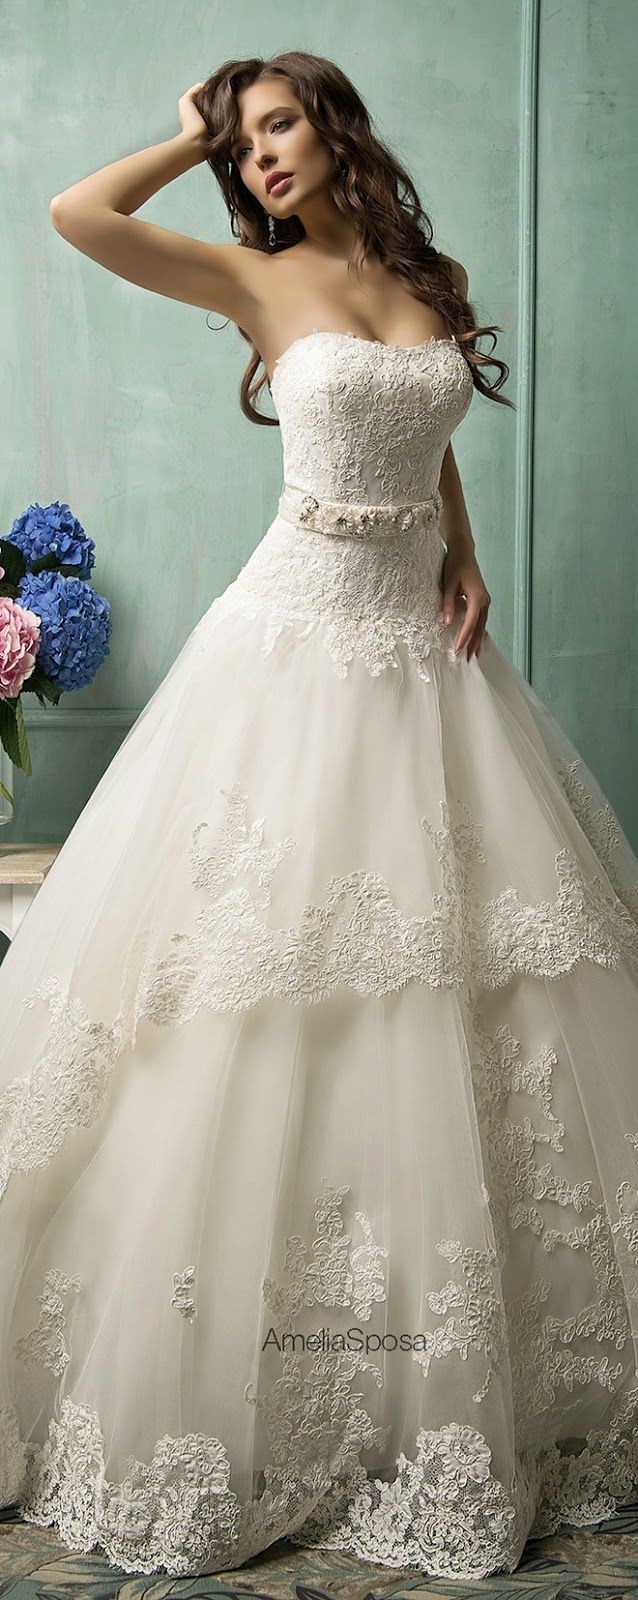 Amelia Sposa 2014 Wedding Dresses  | bellethemagaz...